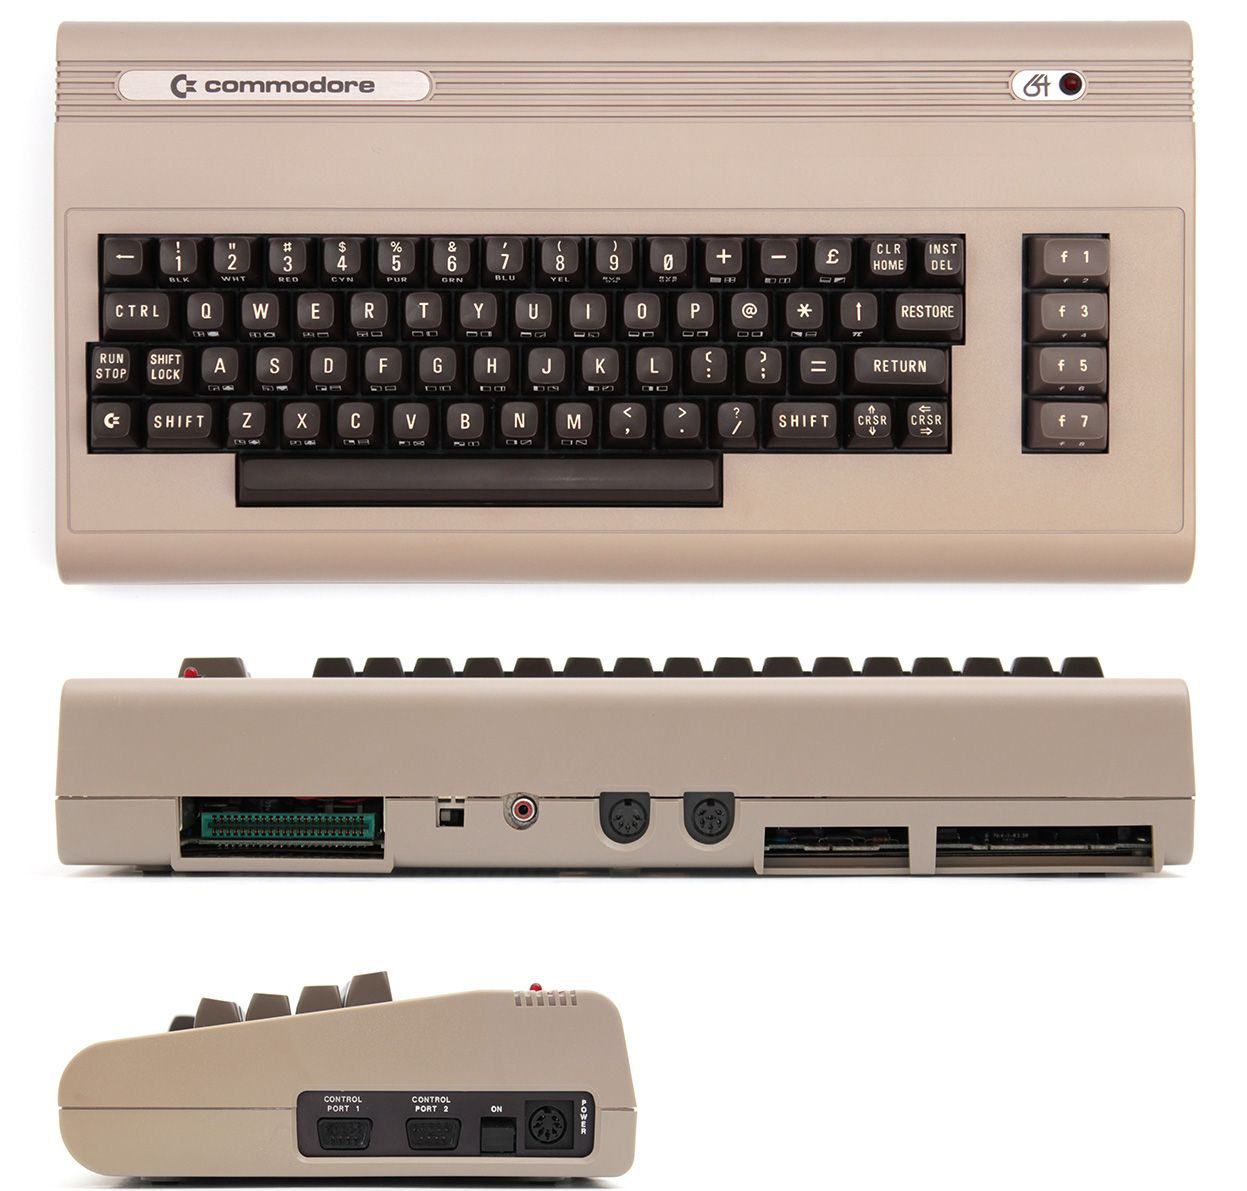 технологии второй половины 20 века: Commodore 64